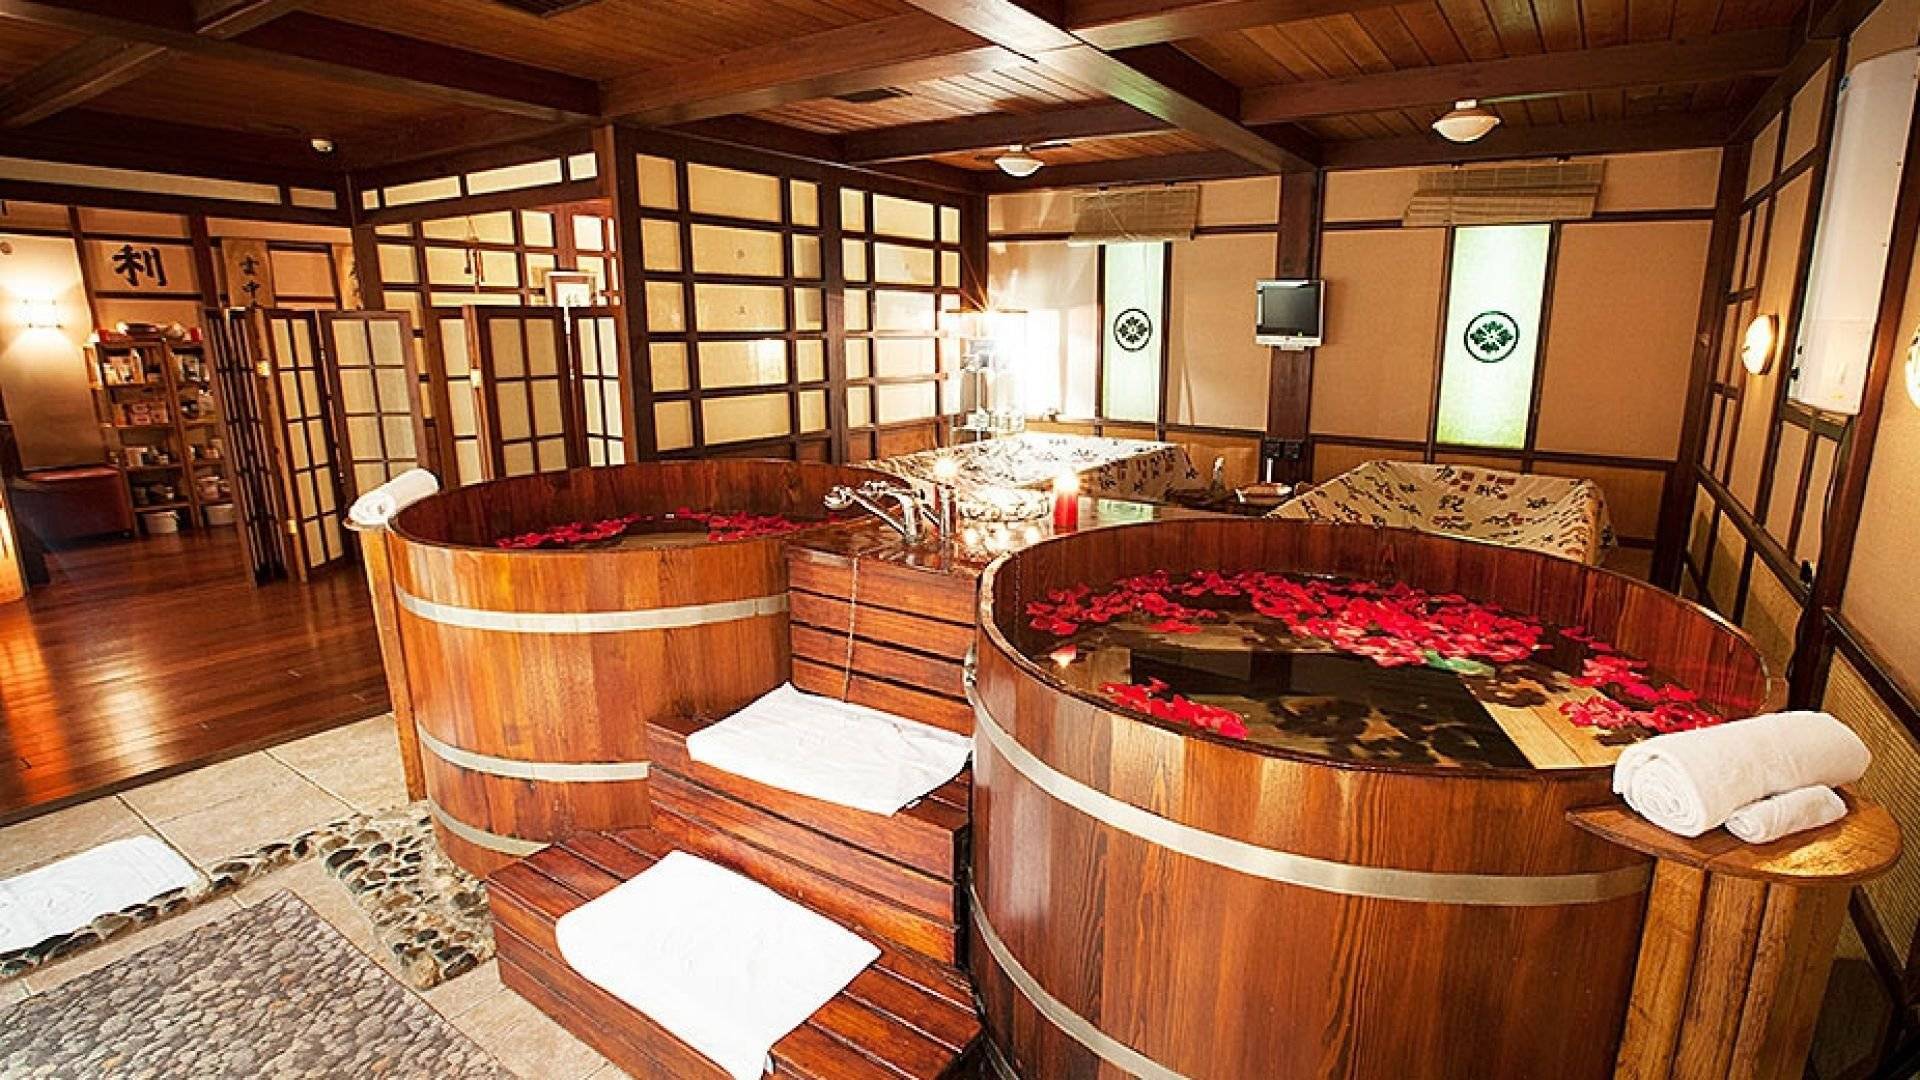 Японская баня офуро своими руками - тонкости и основы
японская баня офуро своими руками - тонкости и основы